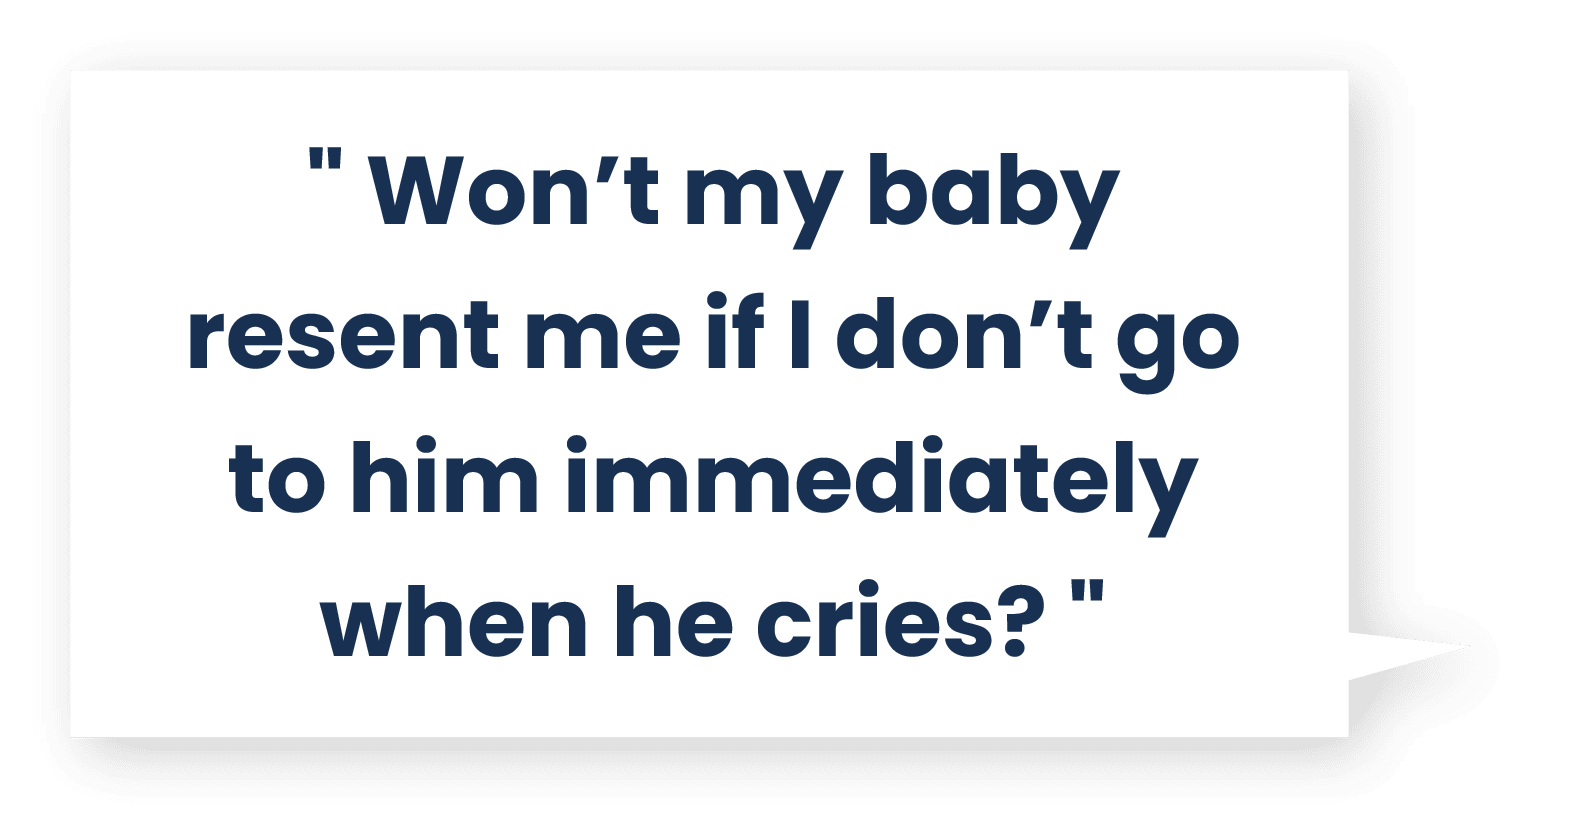 Won’t my baby resent me if I don’t go to him immediately when he cries?